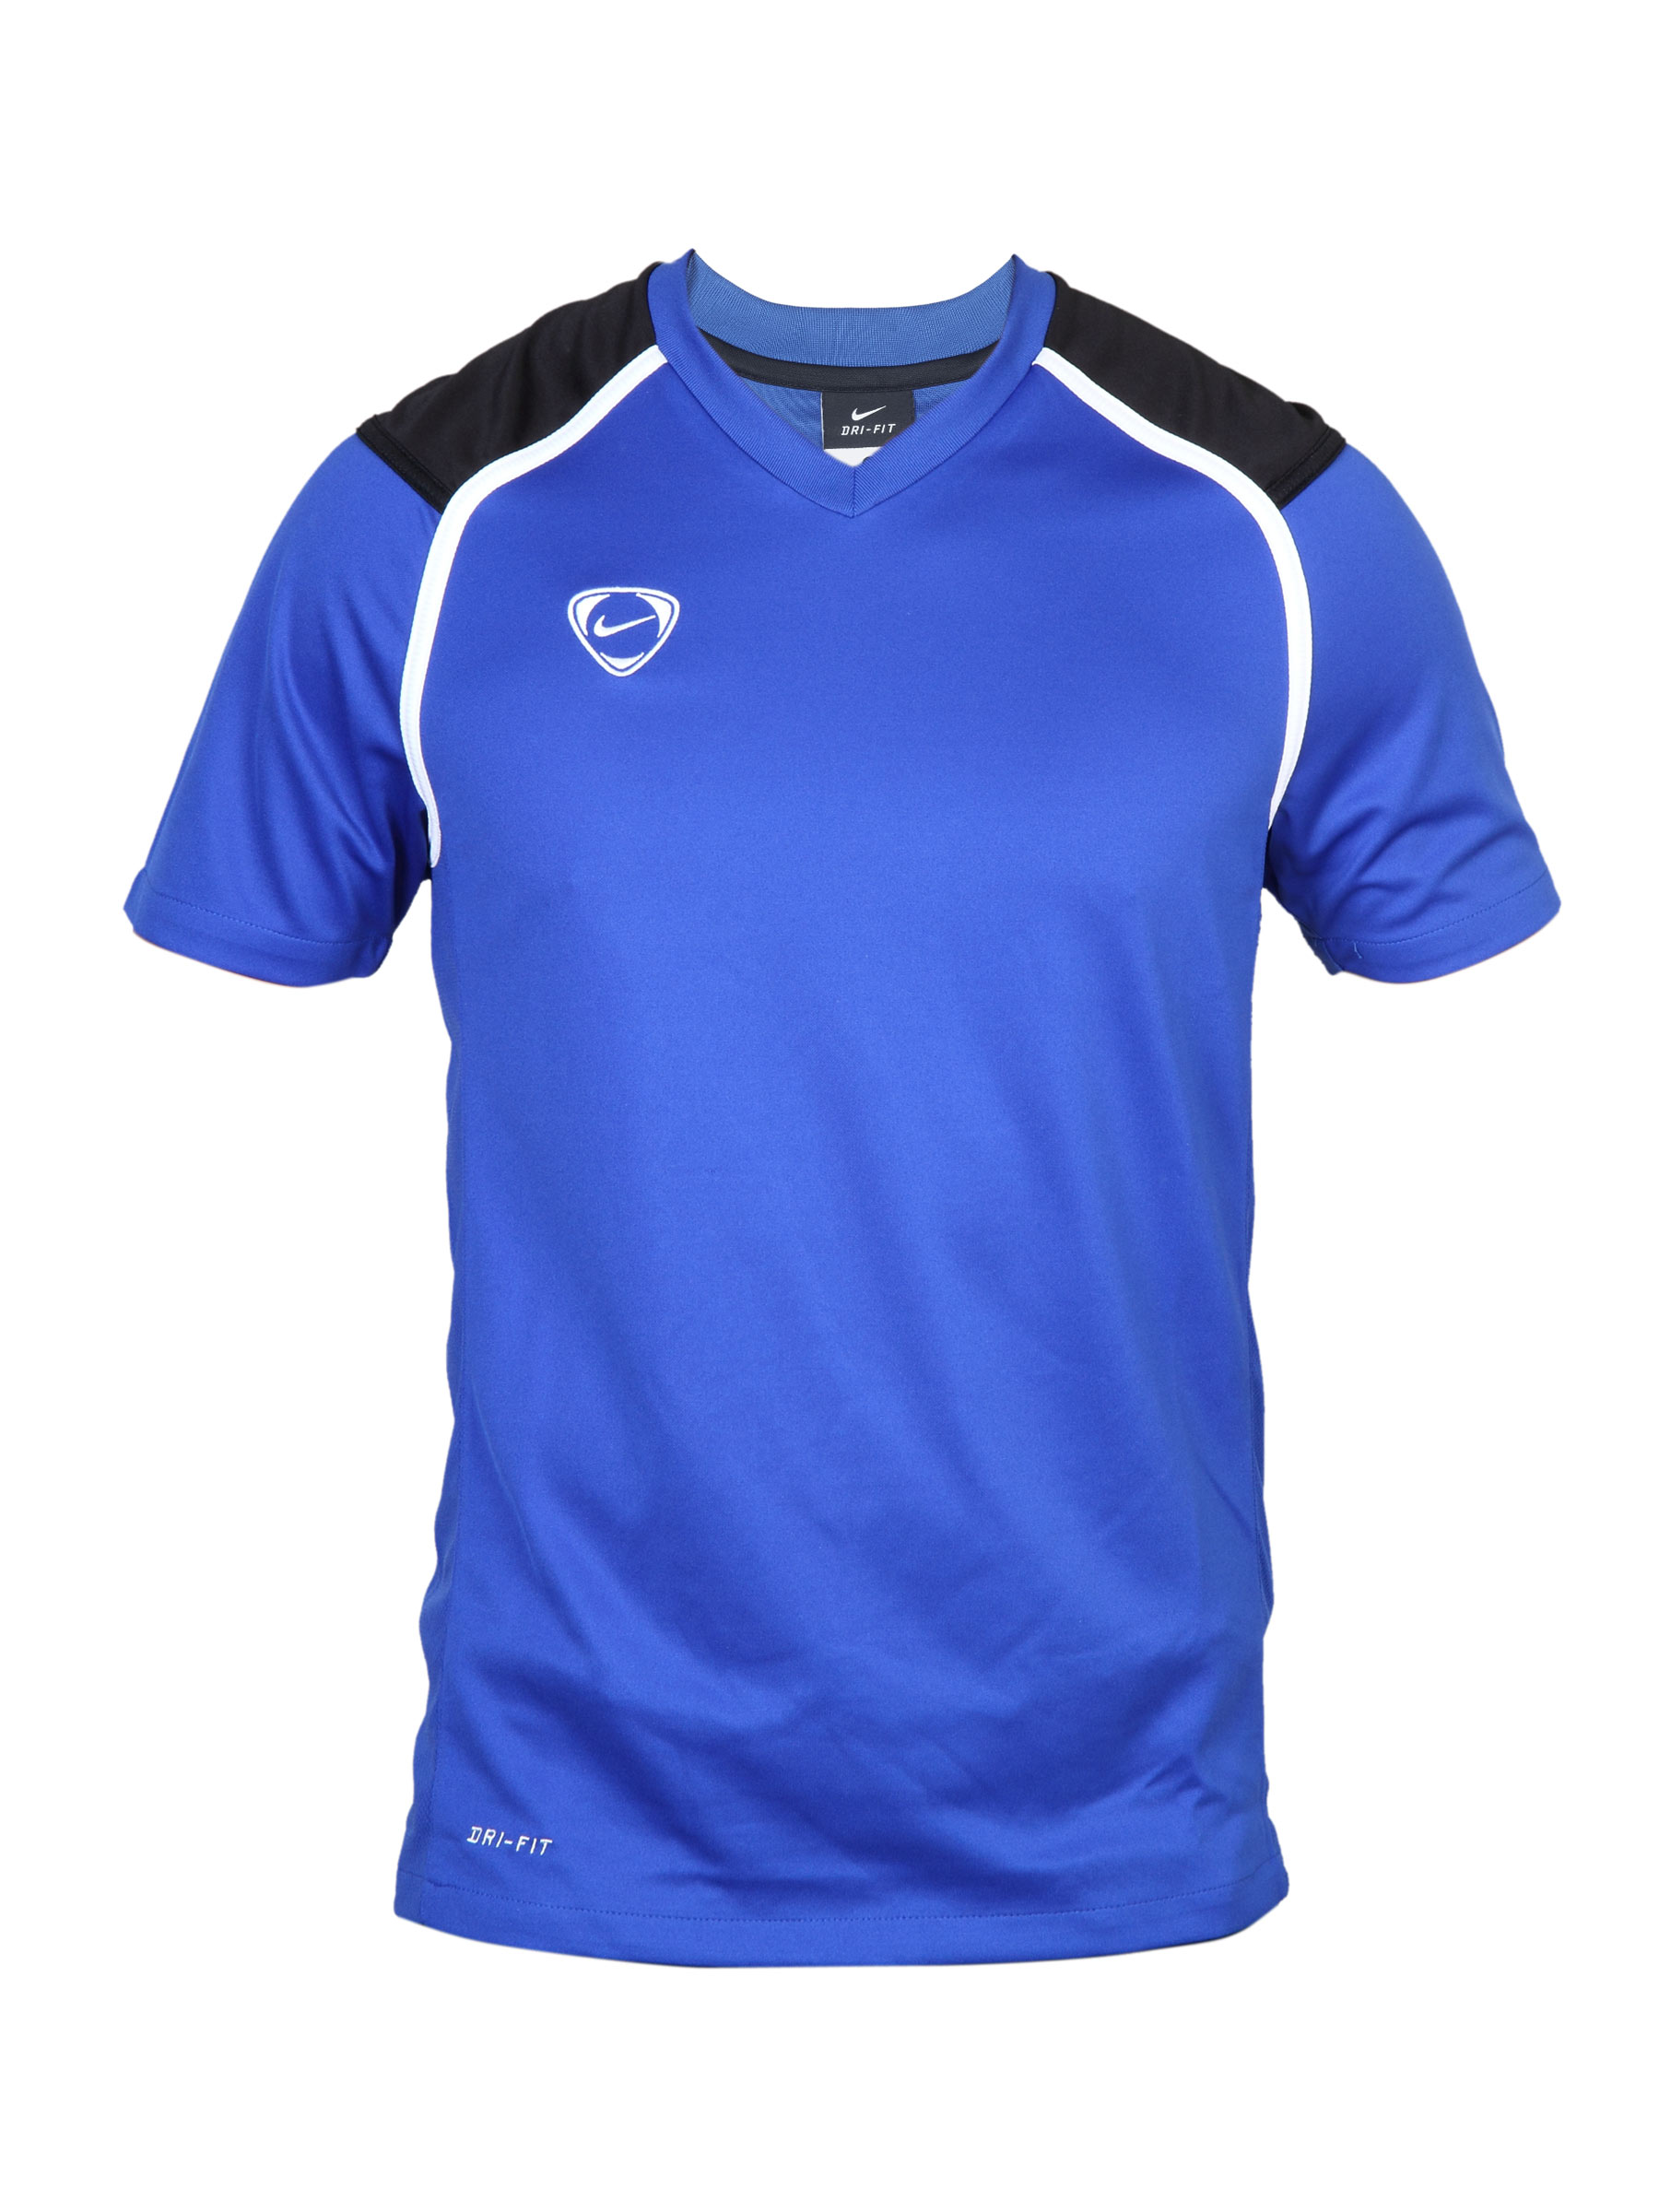 Nike Men's As Training Blue T-shirt